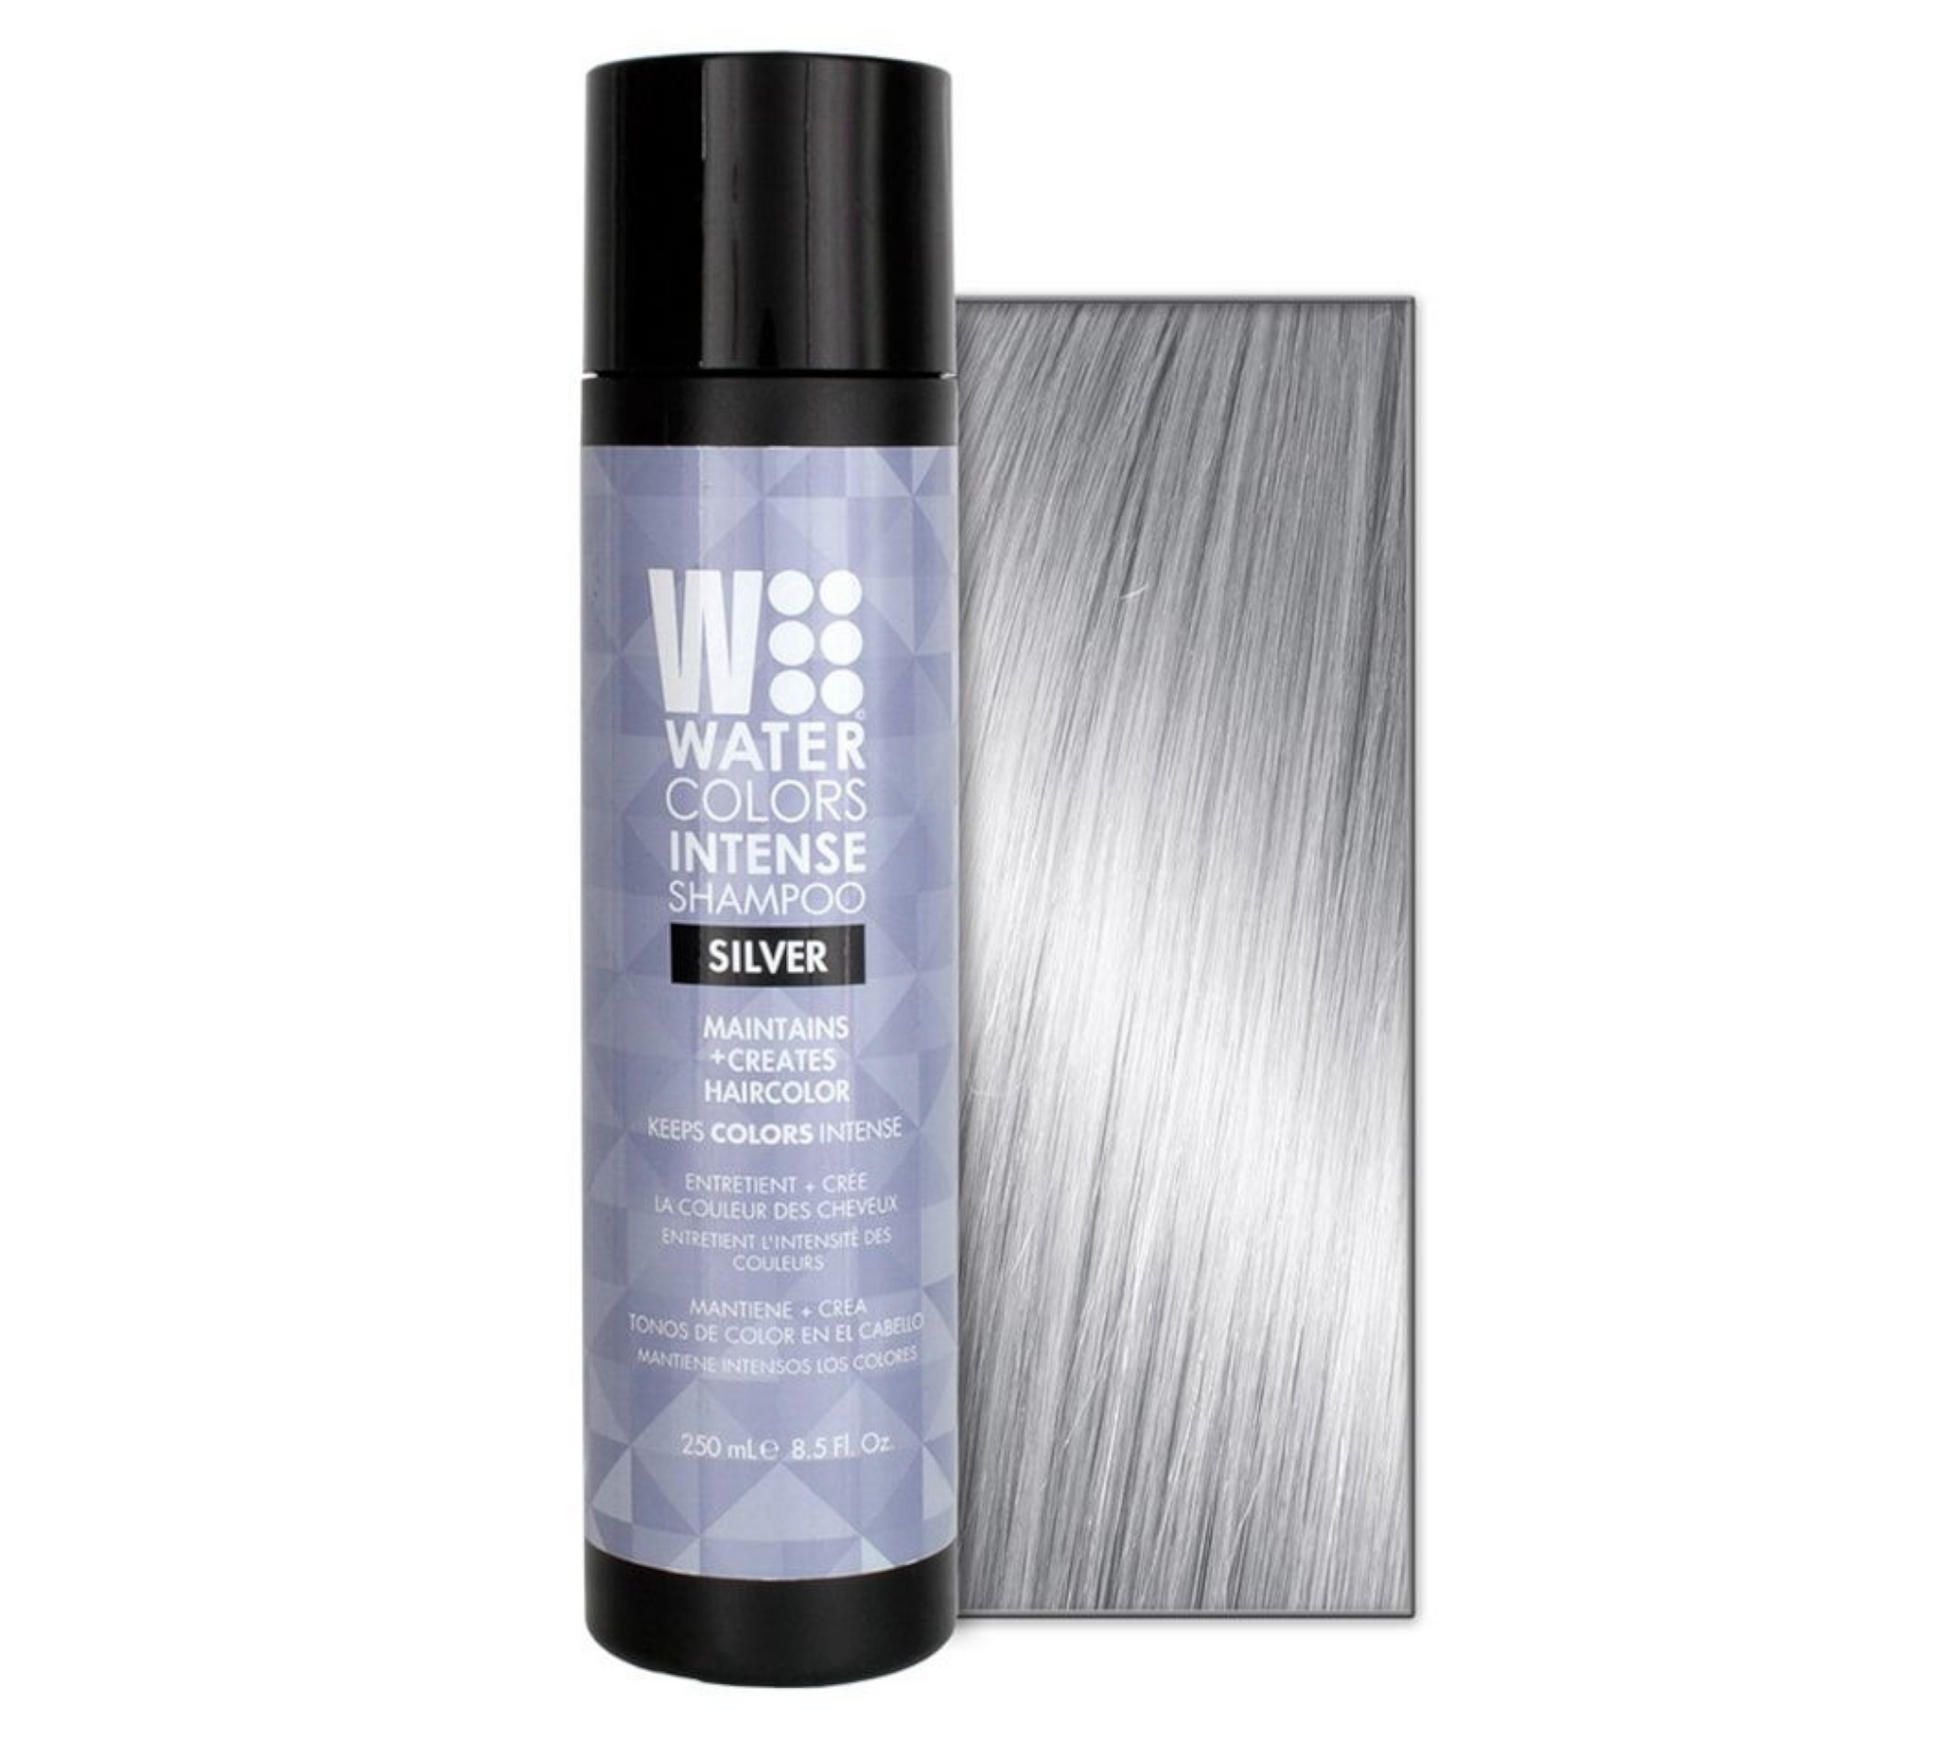 Watercolors Hair Cupid Beauty Supplies 8.5 Fl.Oz / Silver Temporary Color Shampoos Watercolors Intense Metallic Shampoo